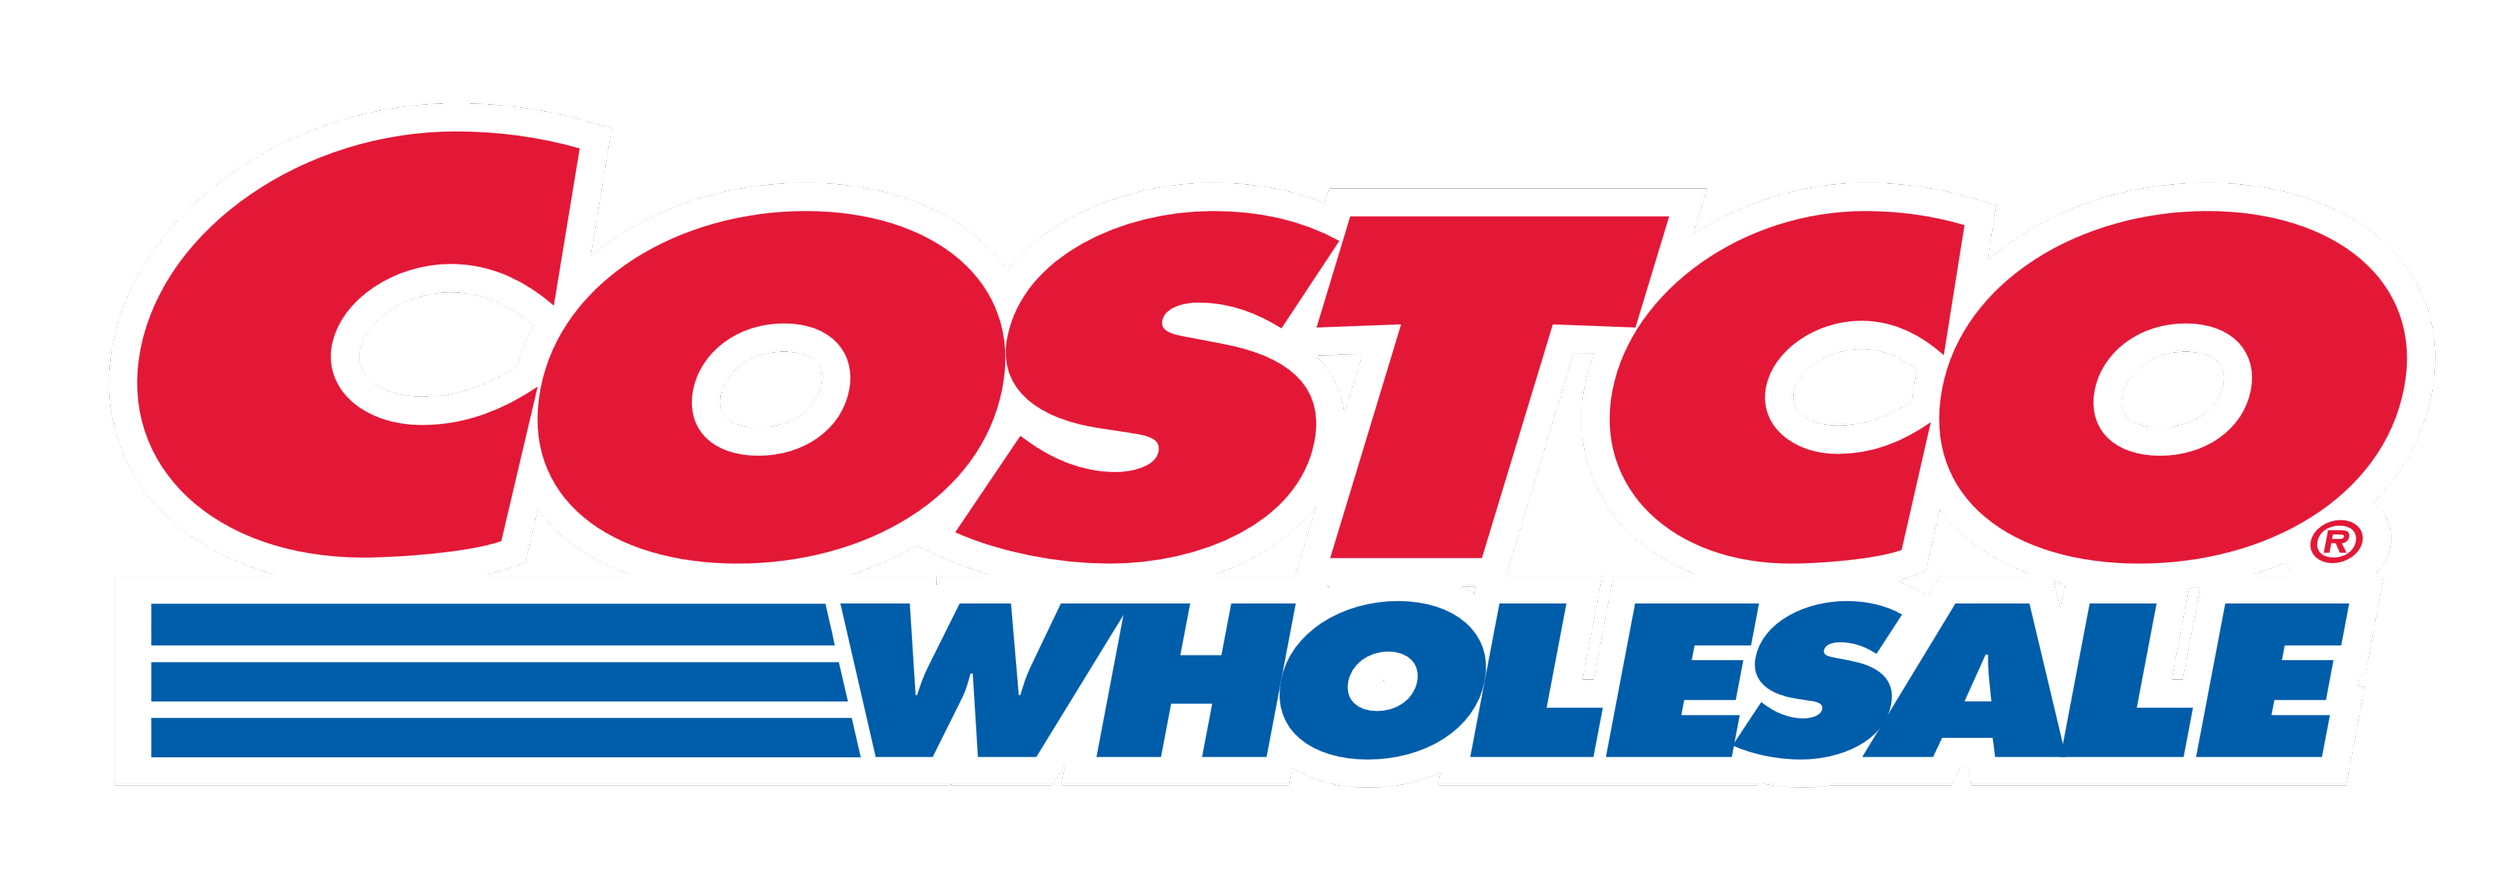 Costco-Wholesale-logo.png